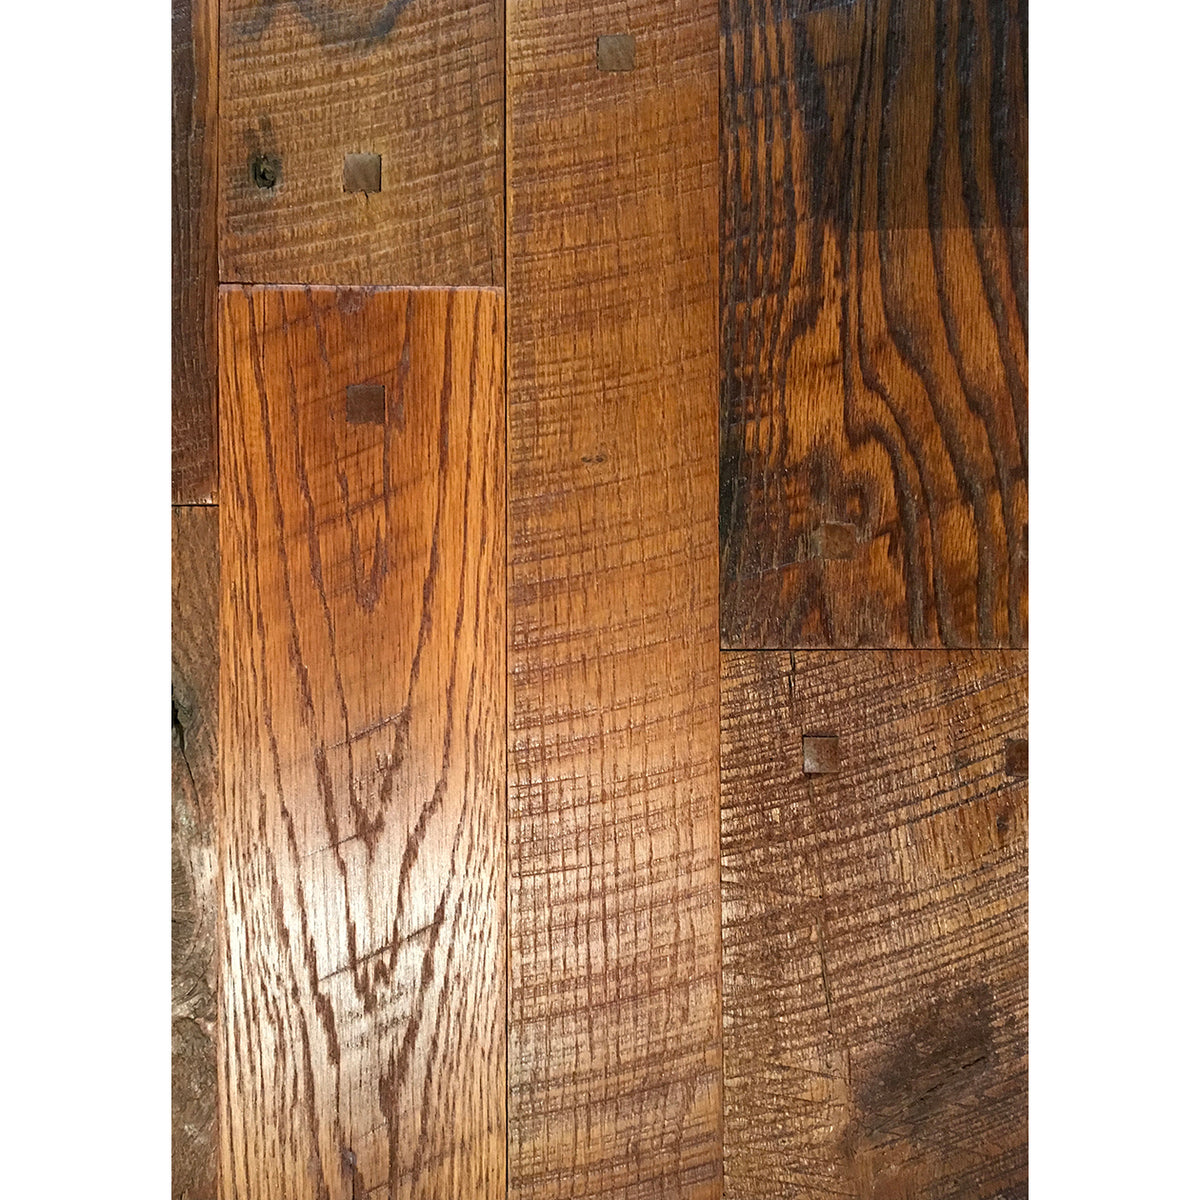 Tennessee Wood Flooring - Reclaimed - Wine Cask